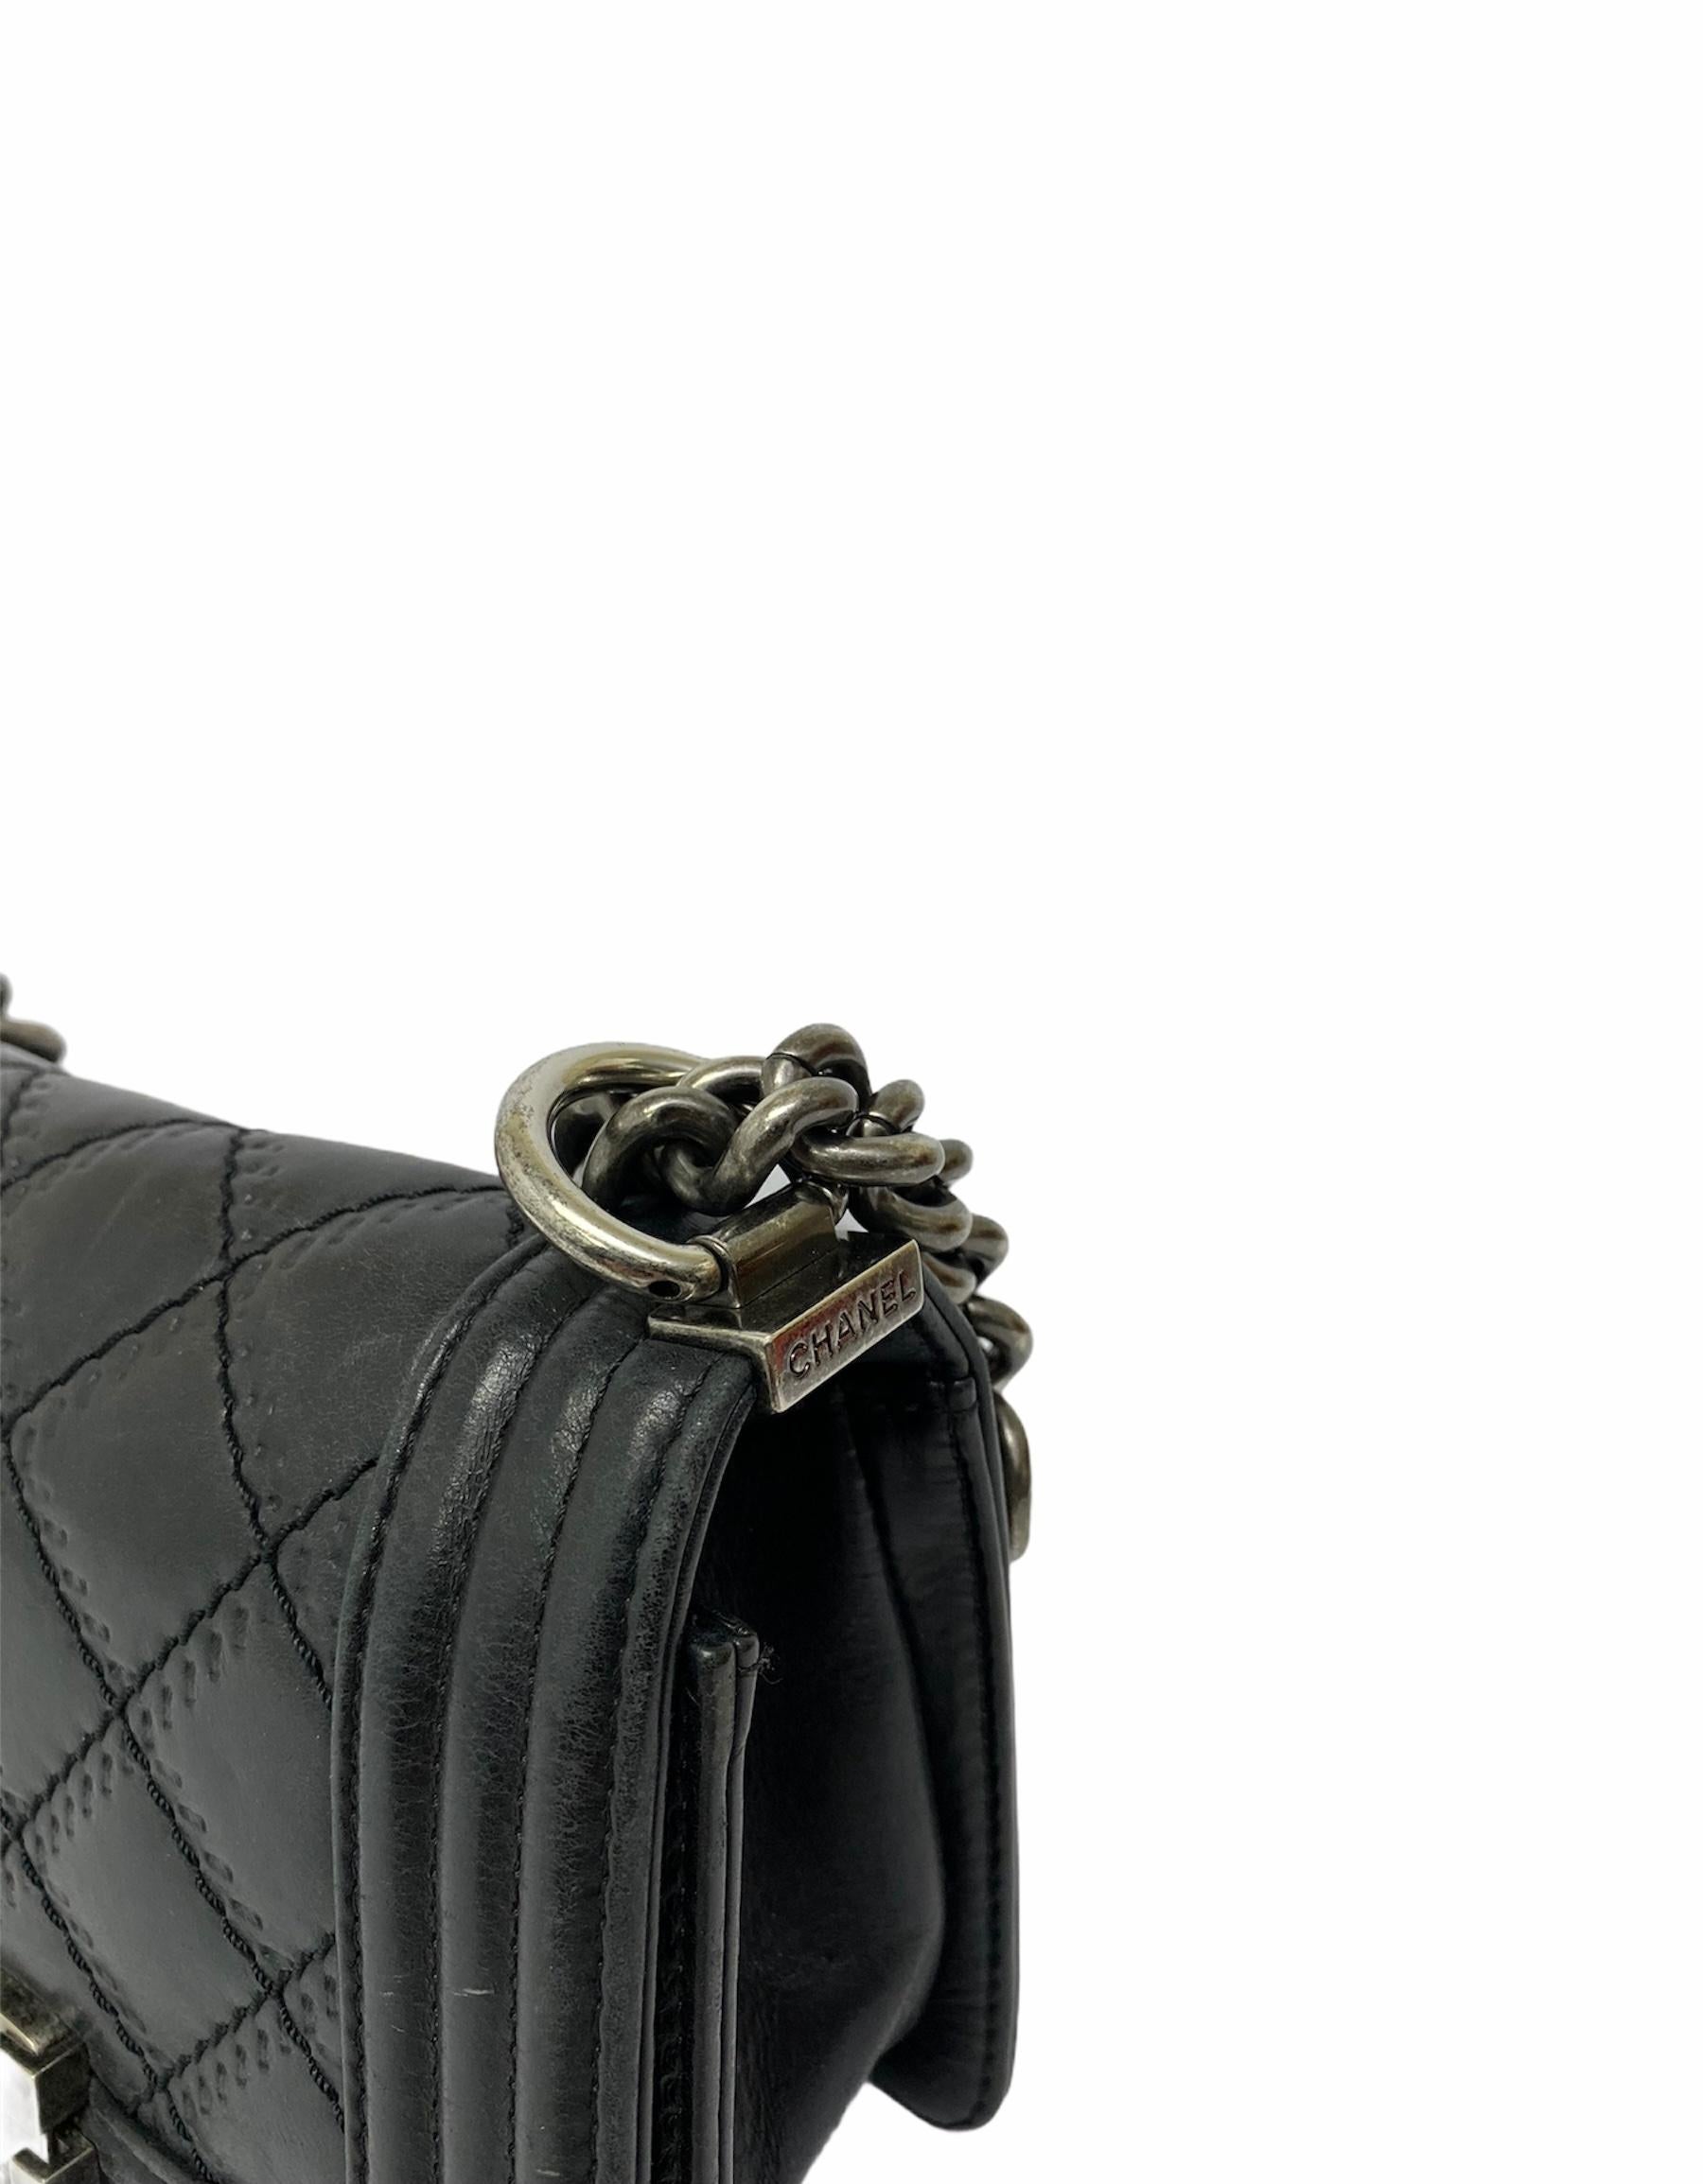 Chanel Black Leather  Boy Bag  5